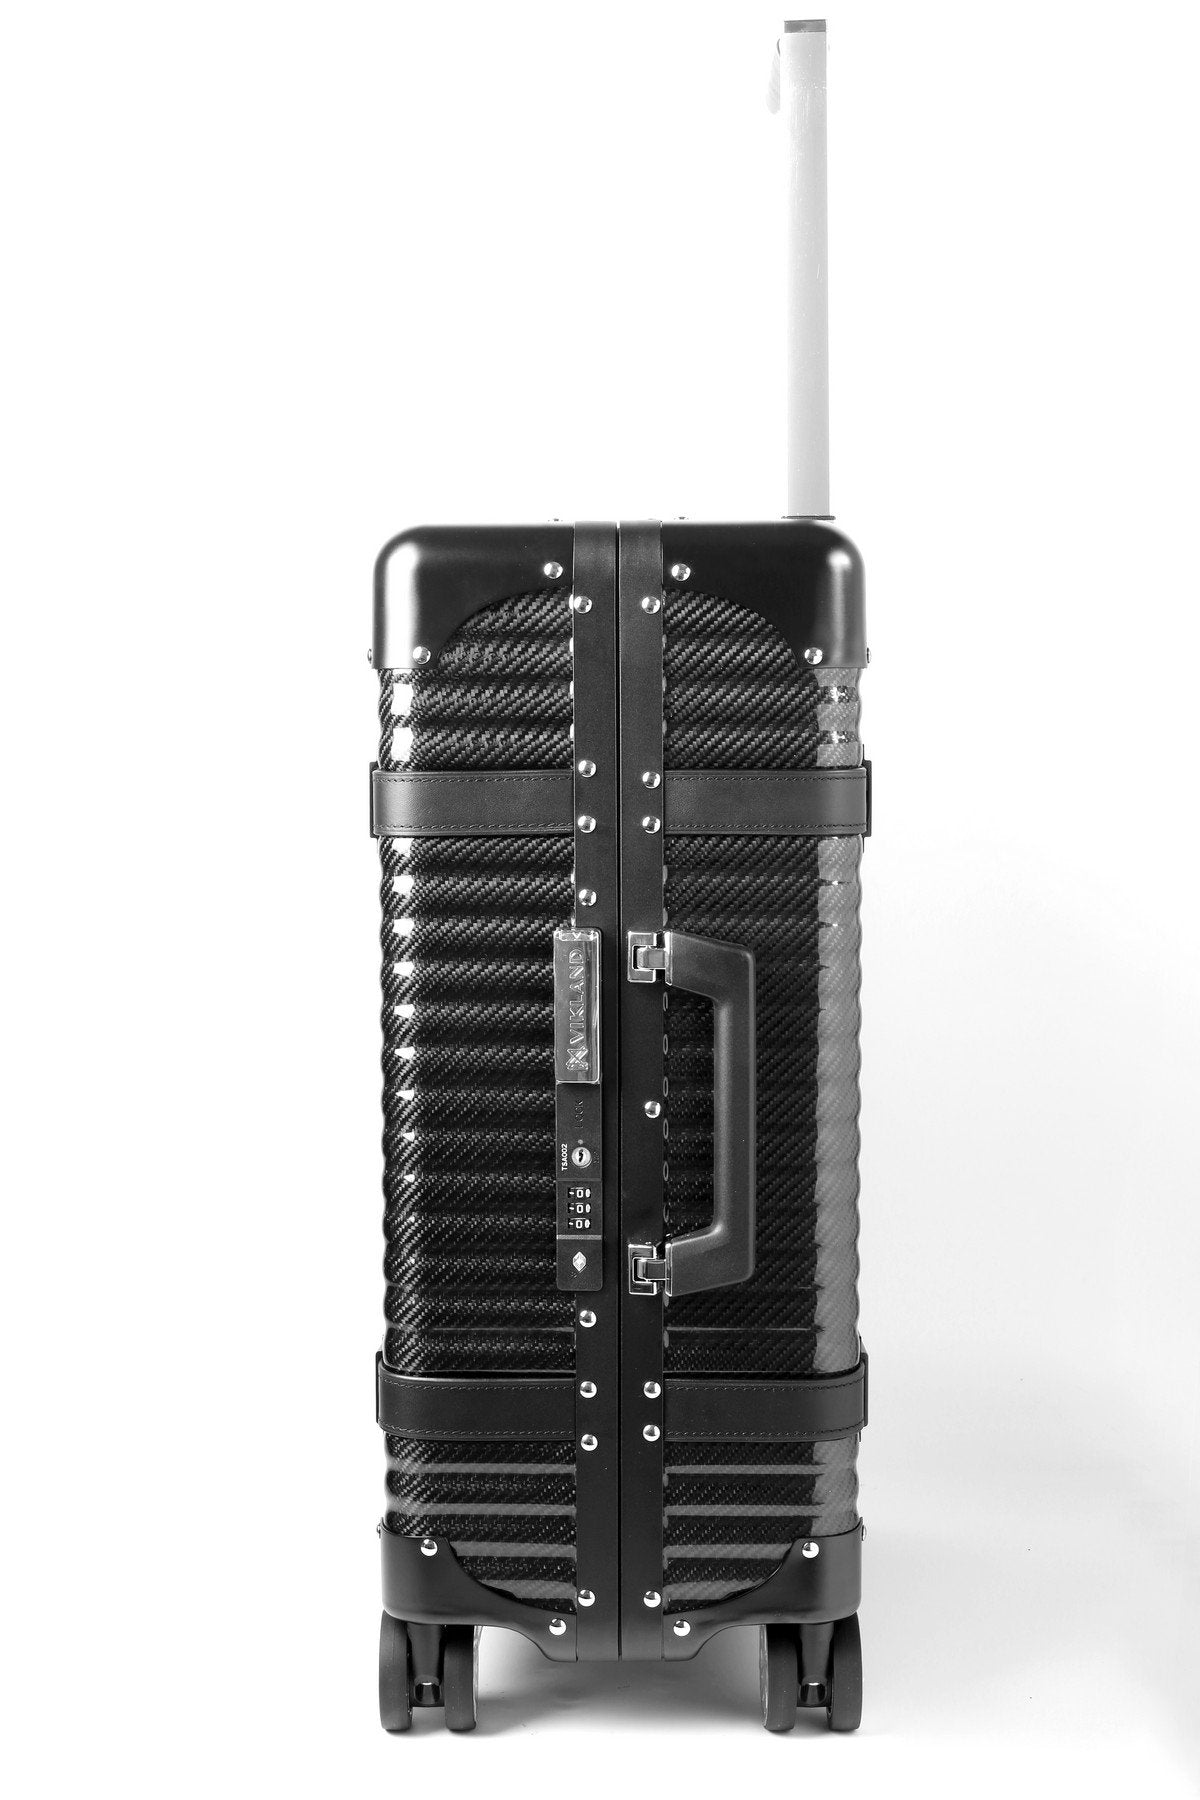 Lanzzo Viking (Black - Carbon Fiber) 22411.24 Lanzzo 維京系列黑色碳纖維24吋旅行行李箱 22411.24